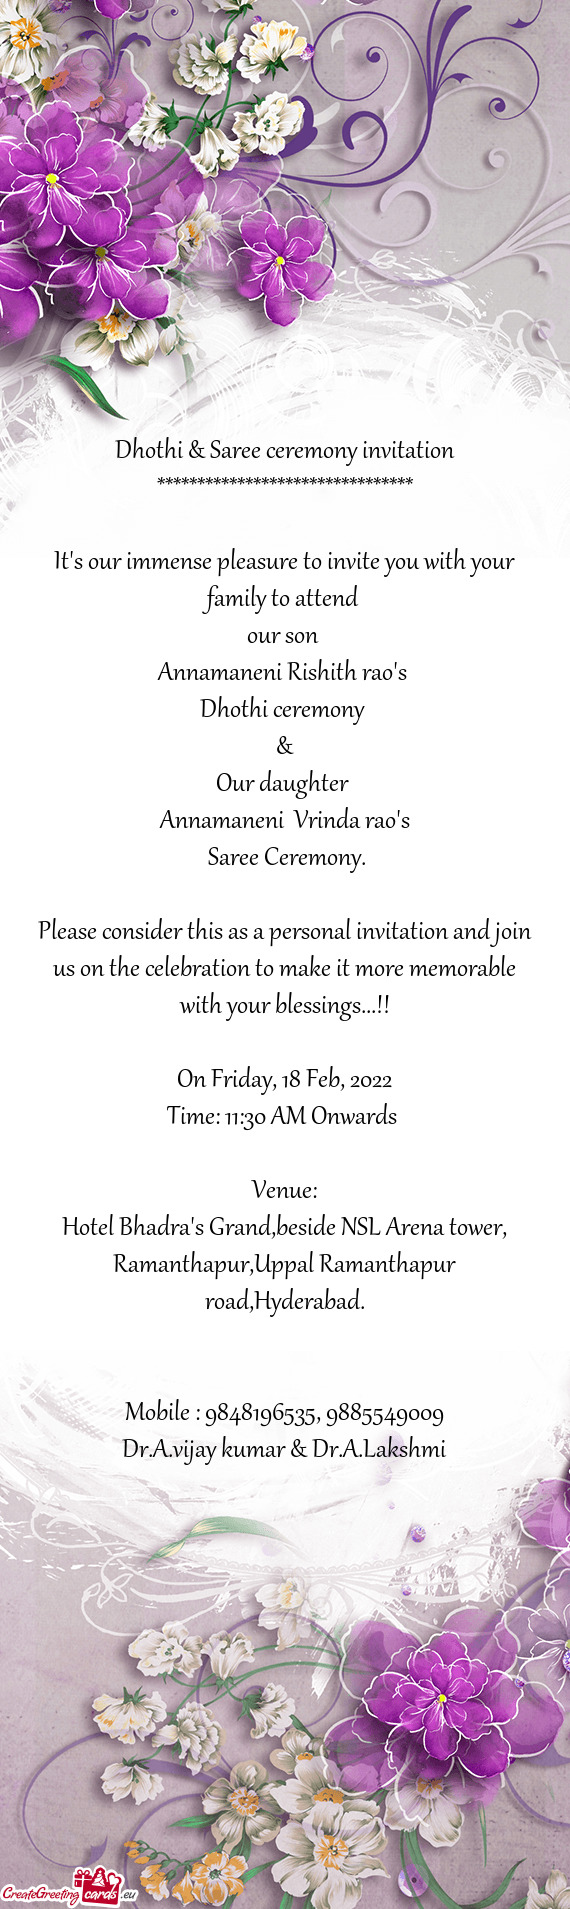 Dhothi & Saree ceremony invitation